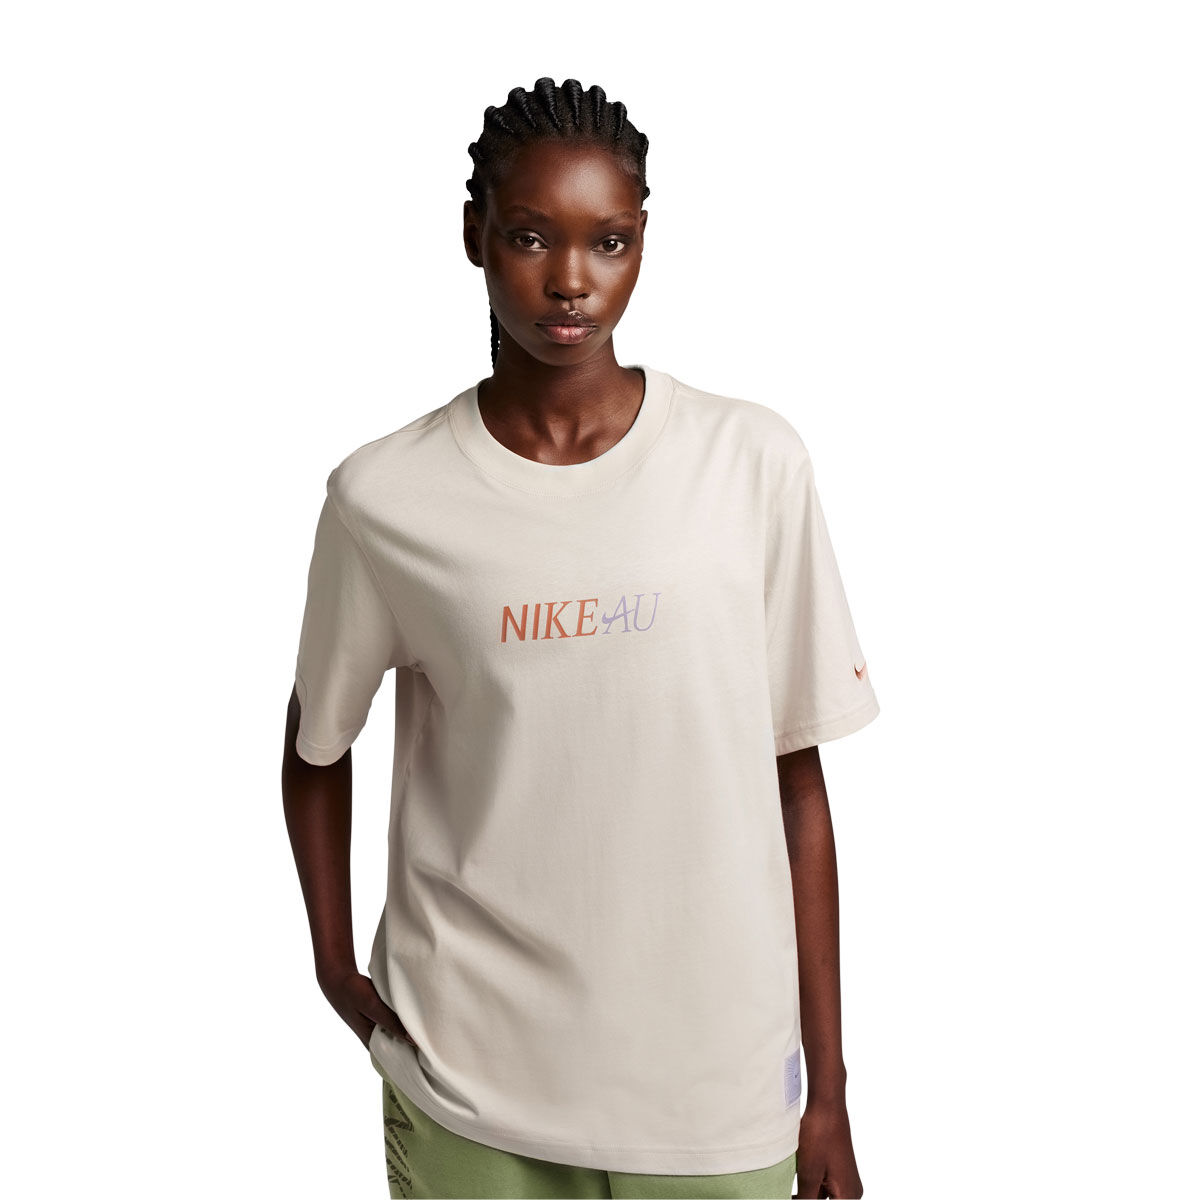 Mets Basketball Nike T-Shirt - Small Orange Cotton